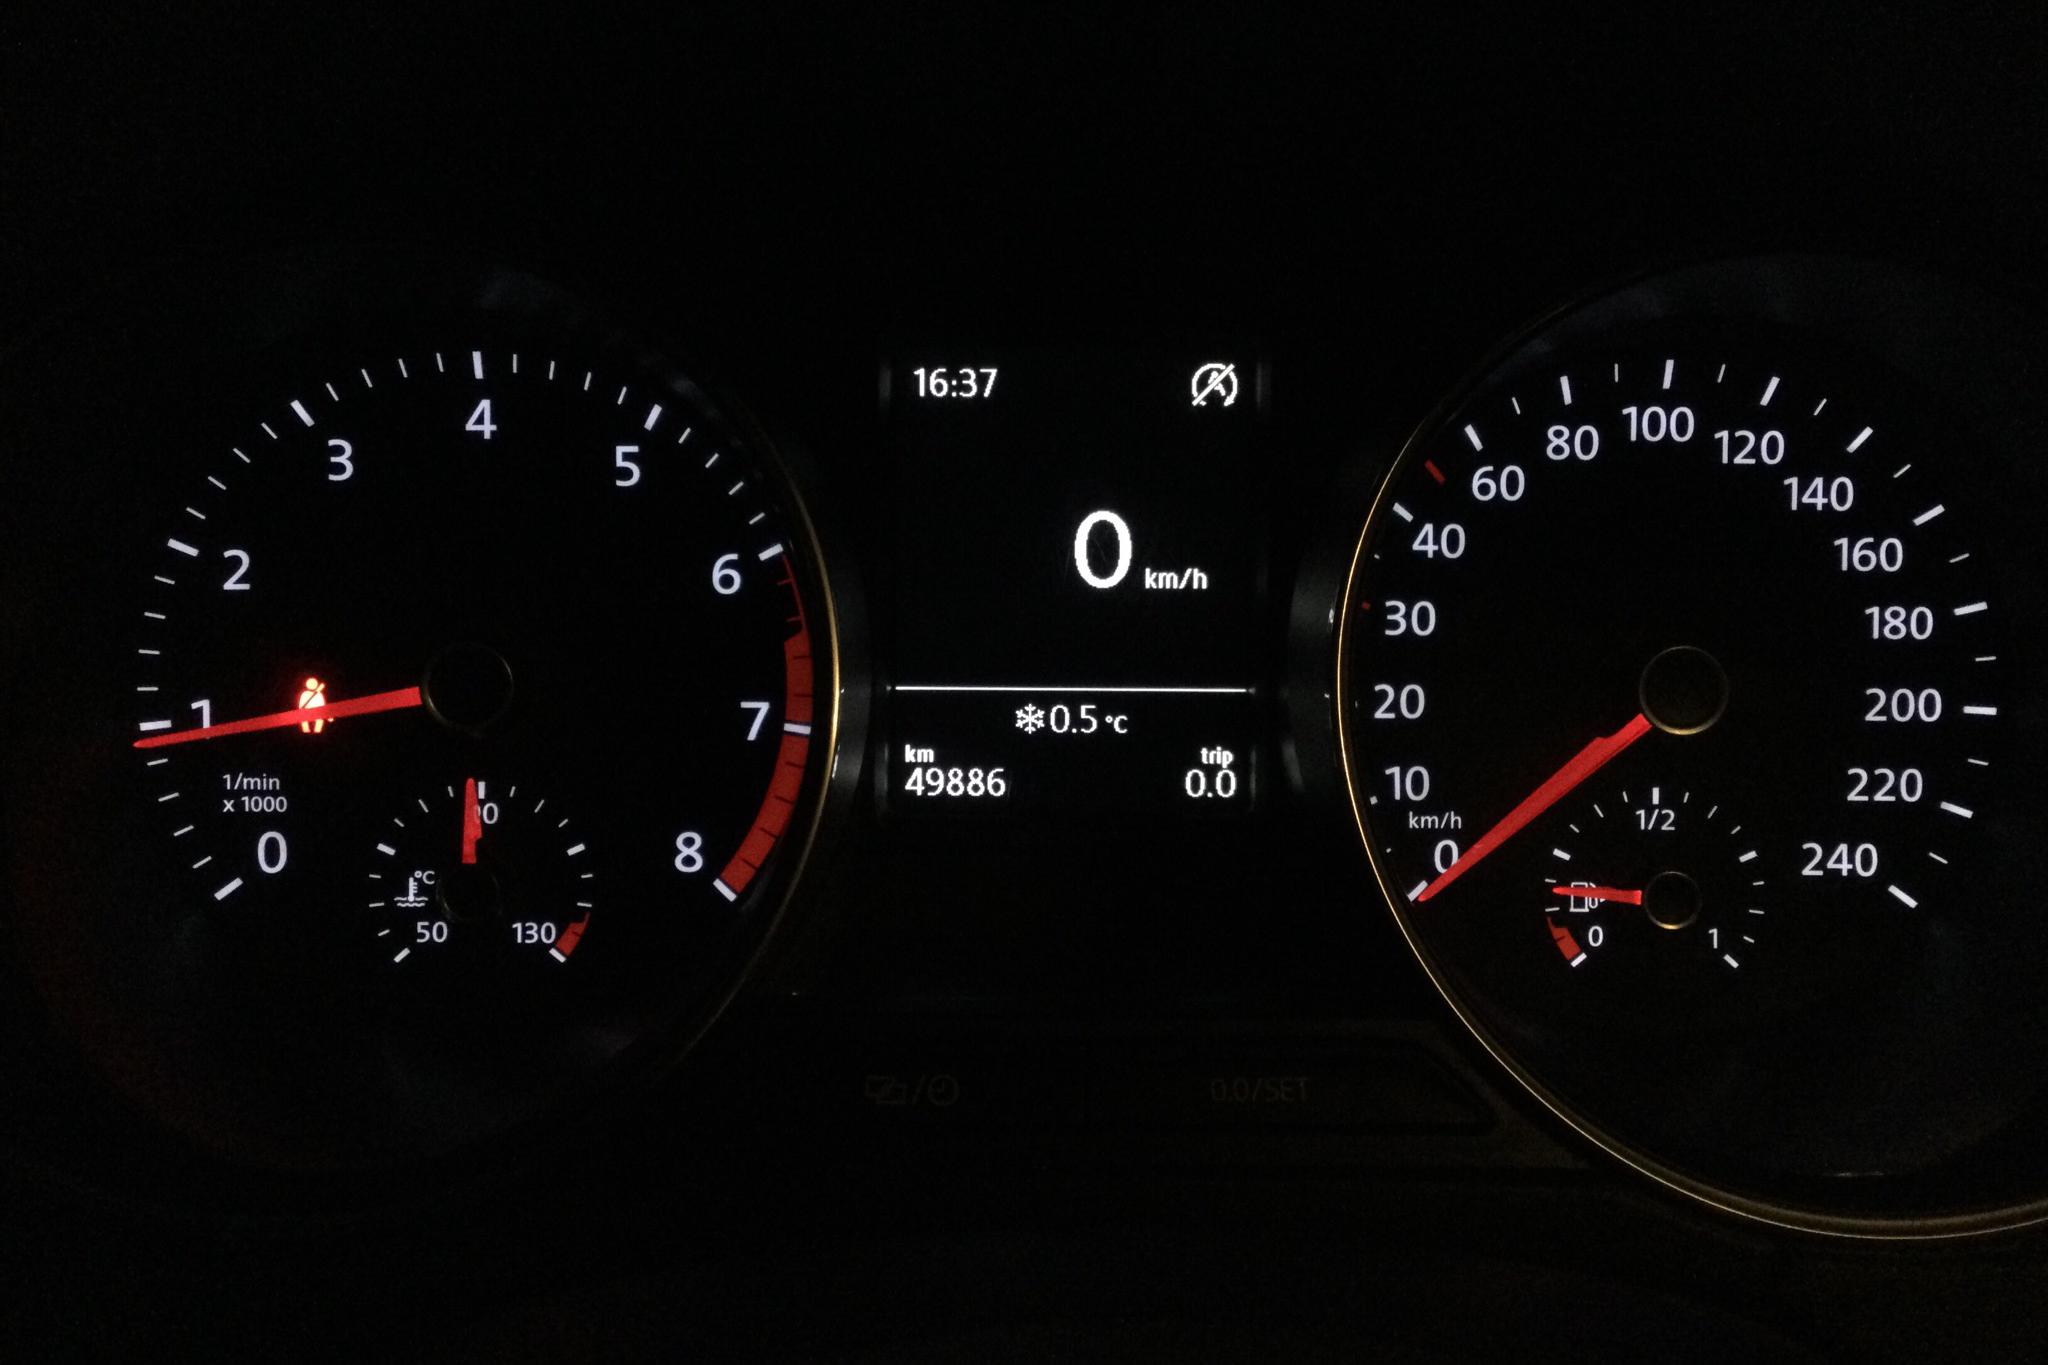 VW Polo 1.2 TSI 5dr (90hk) - 4 988 mil - Manuell - svart - 2015